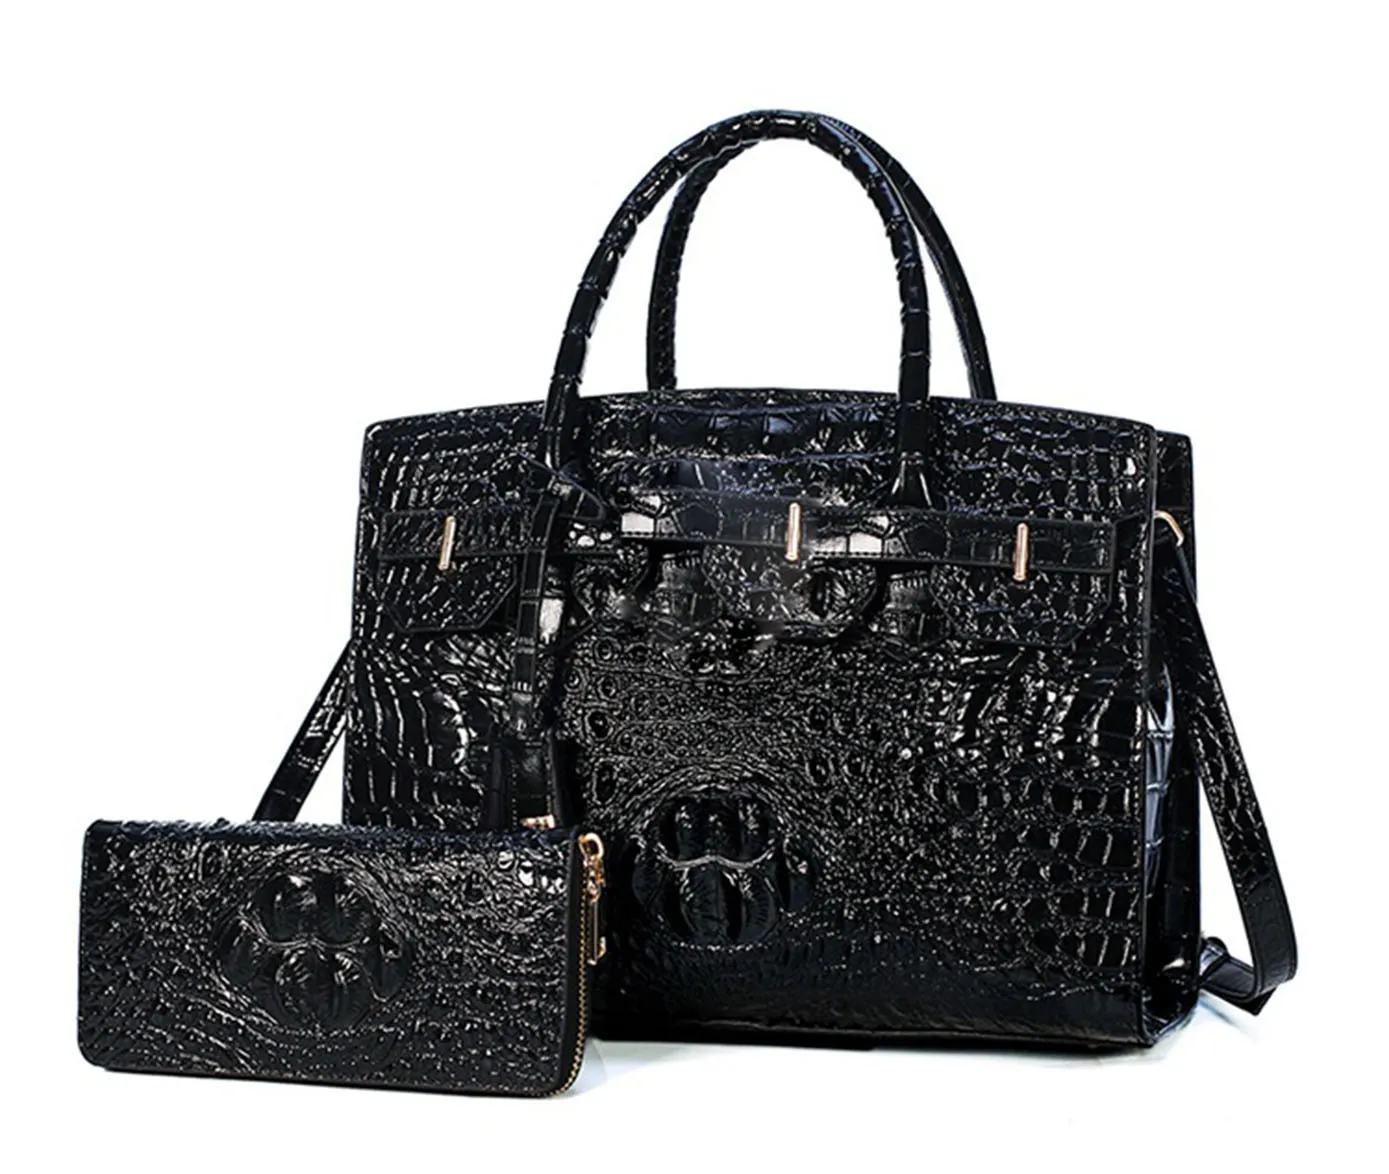 Classic designer Bgas min purse cute size crossbody bag for women luxury handbags girl fashion wallet Fashion Briefcases Smooth bright surface crocodile leather